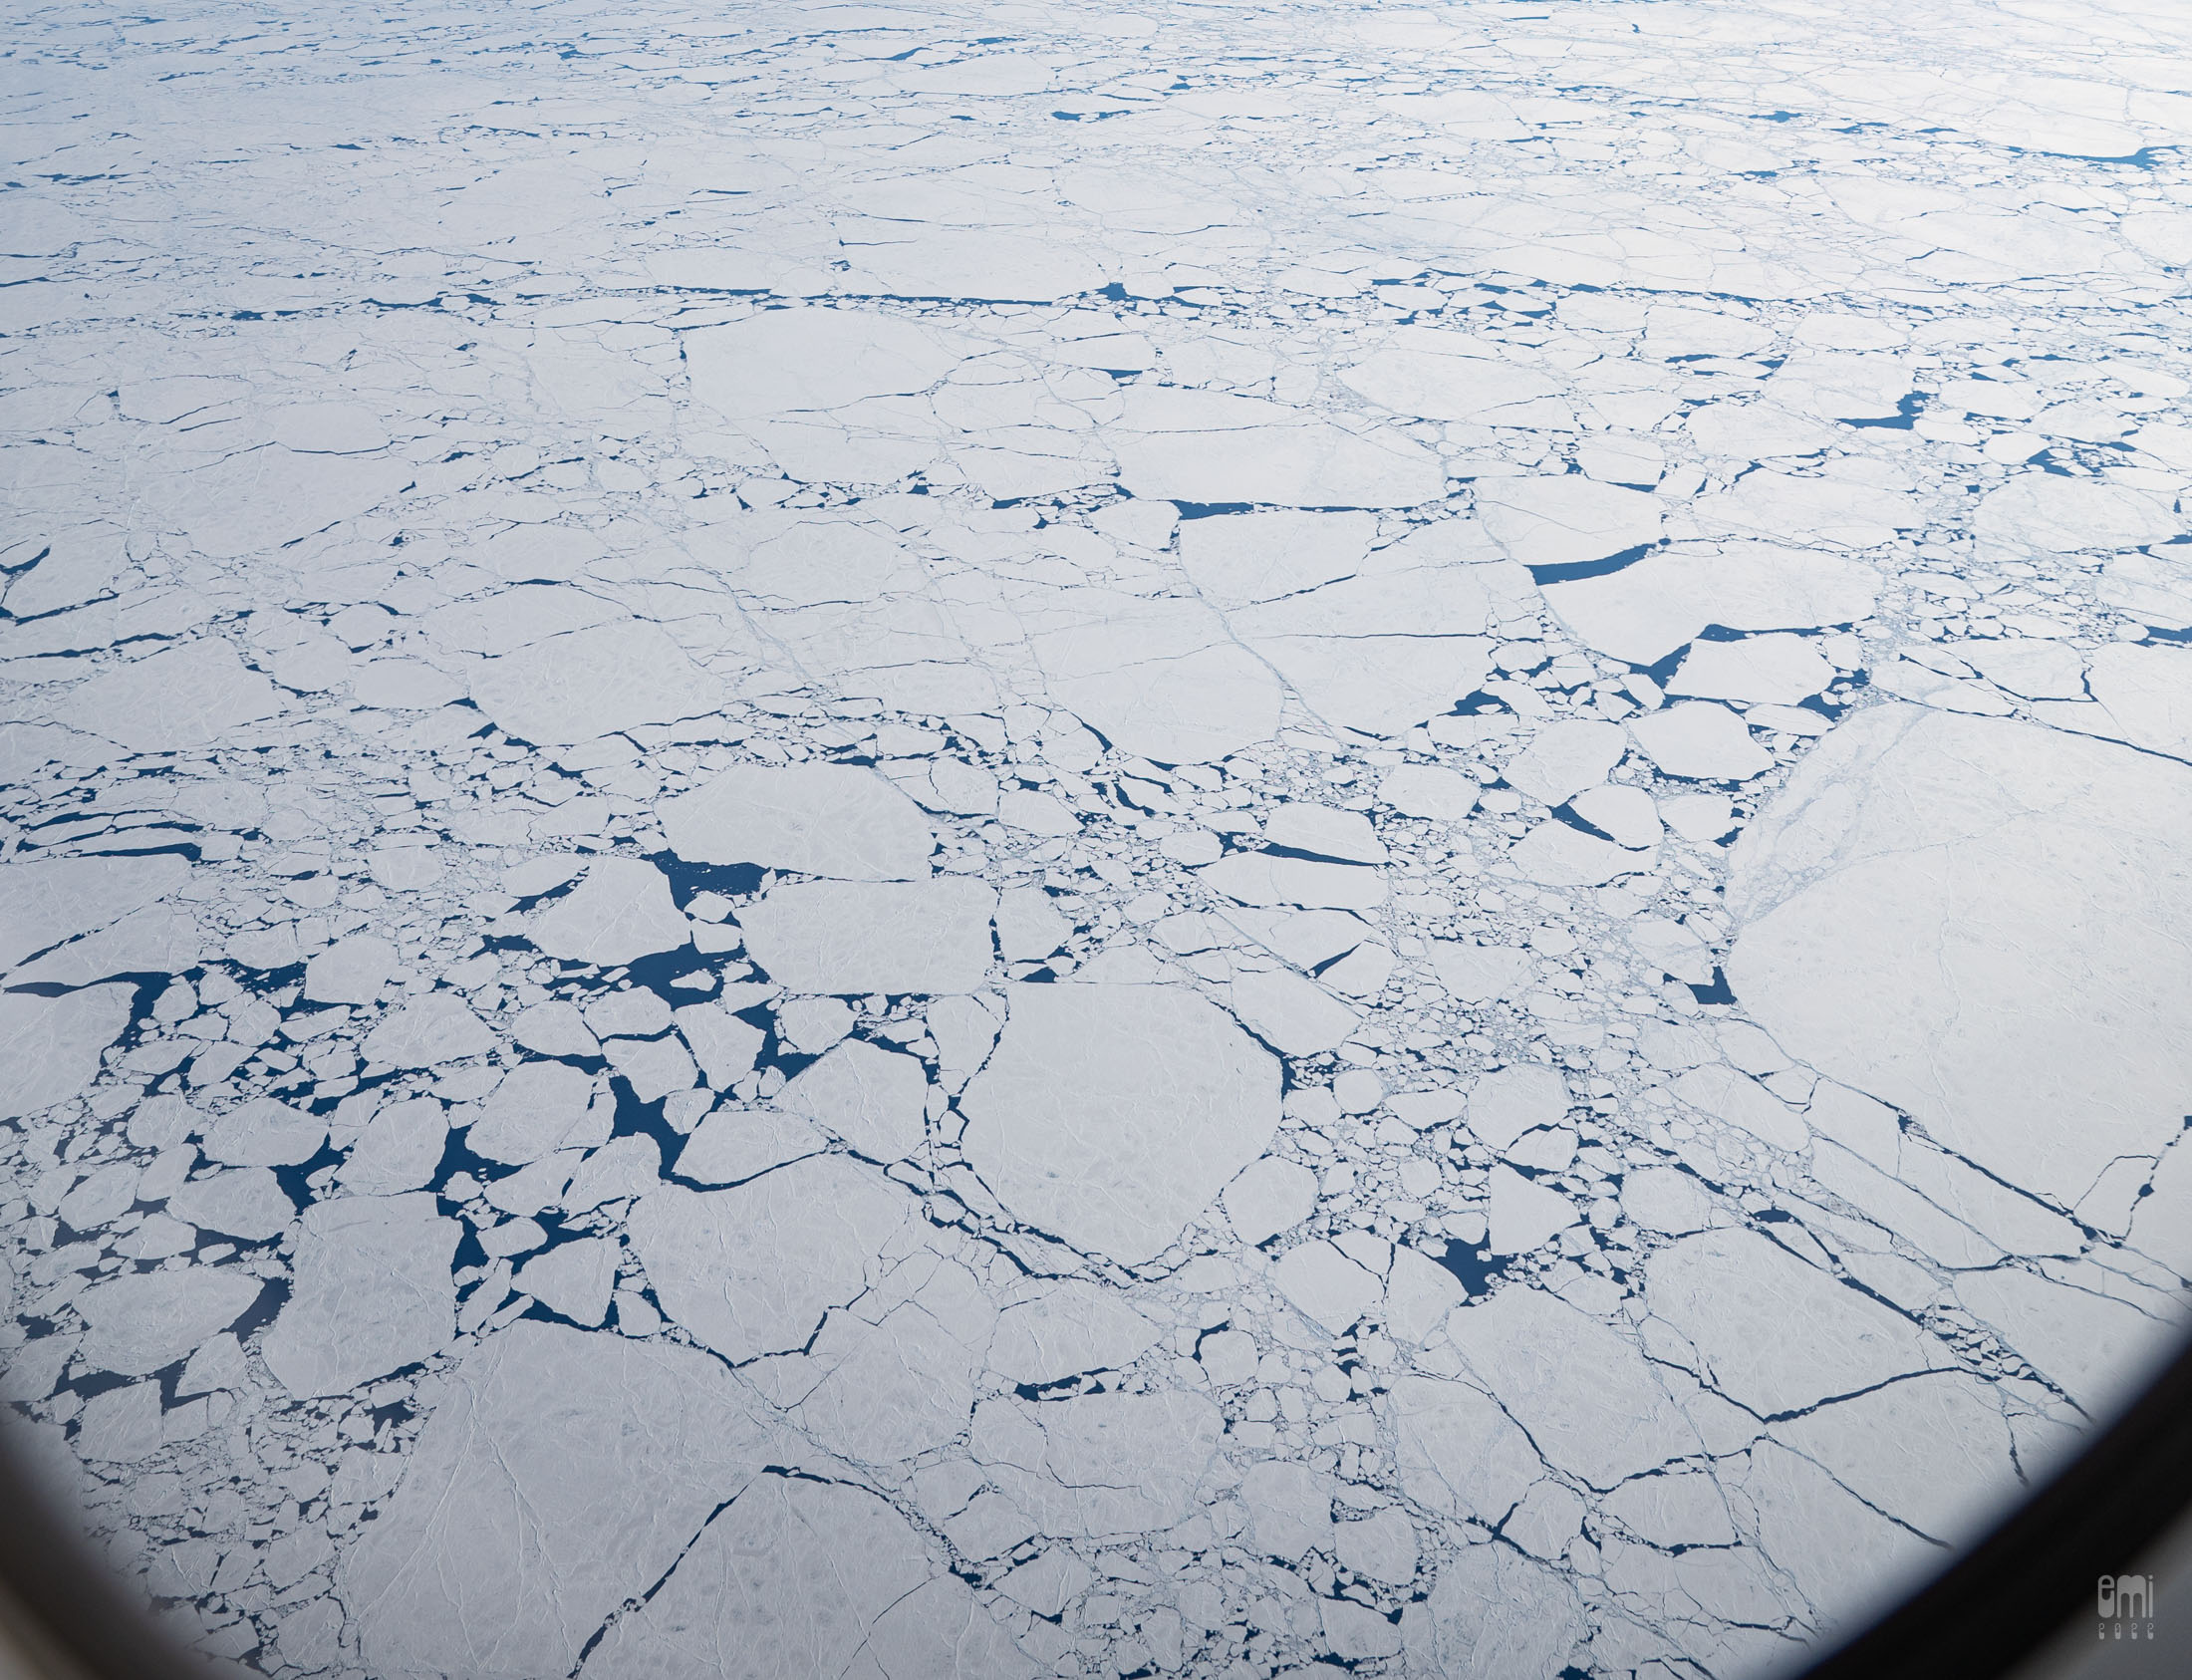 20220628 Arctic Ocean from Finnair emi-9551